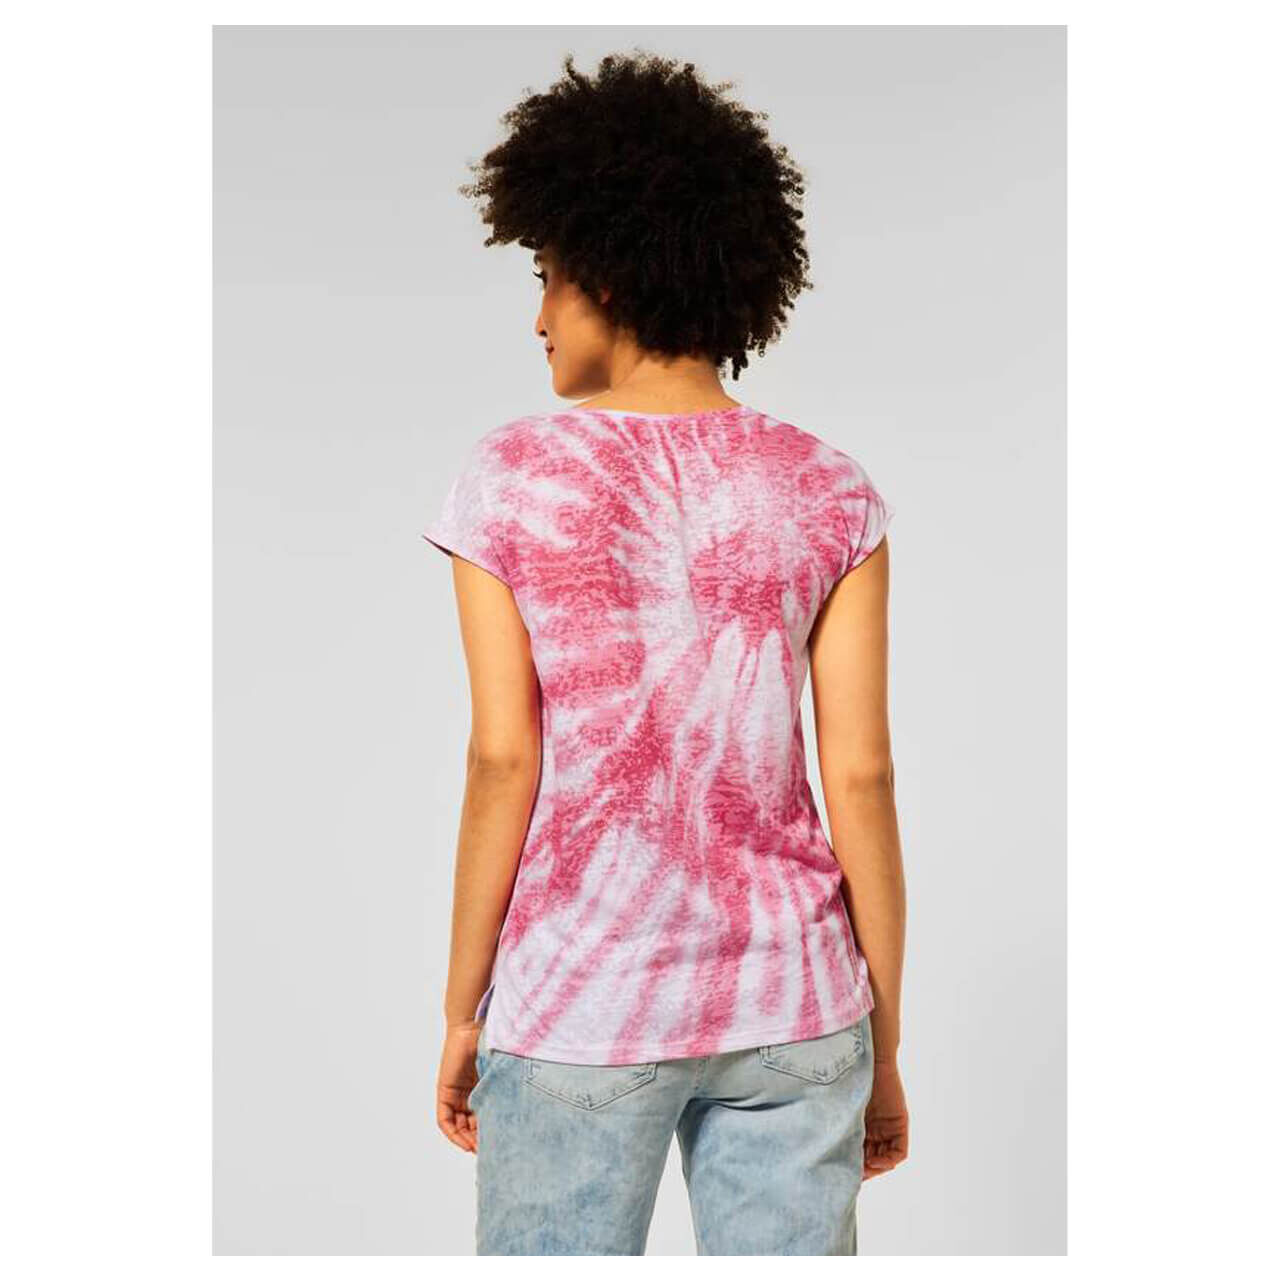 Street One Batic Burn T-Shirt für Damen in Rosa mit Print, FarbNr.: 33834